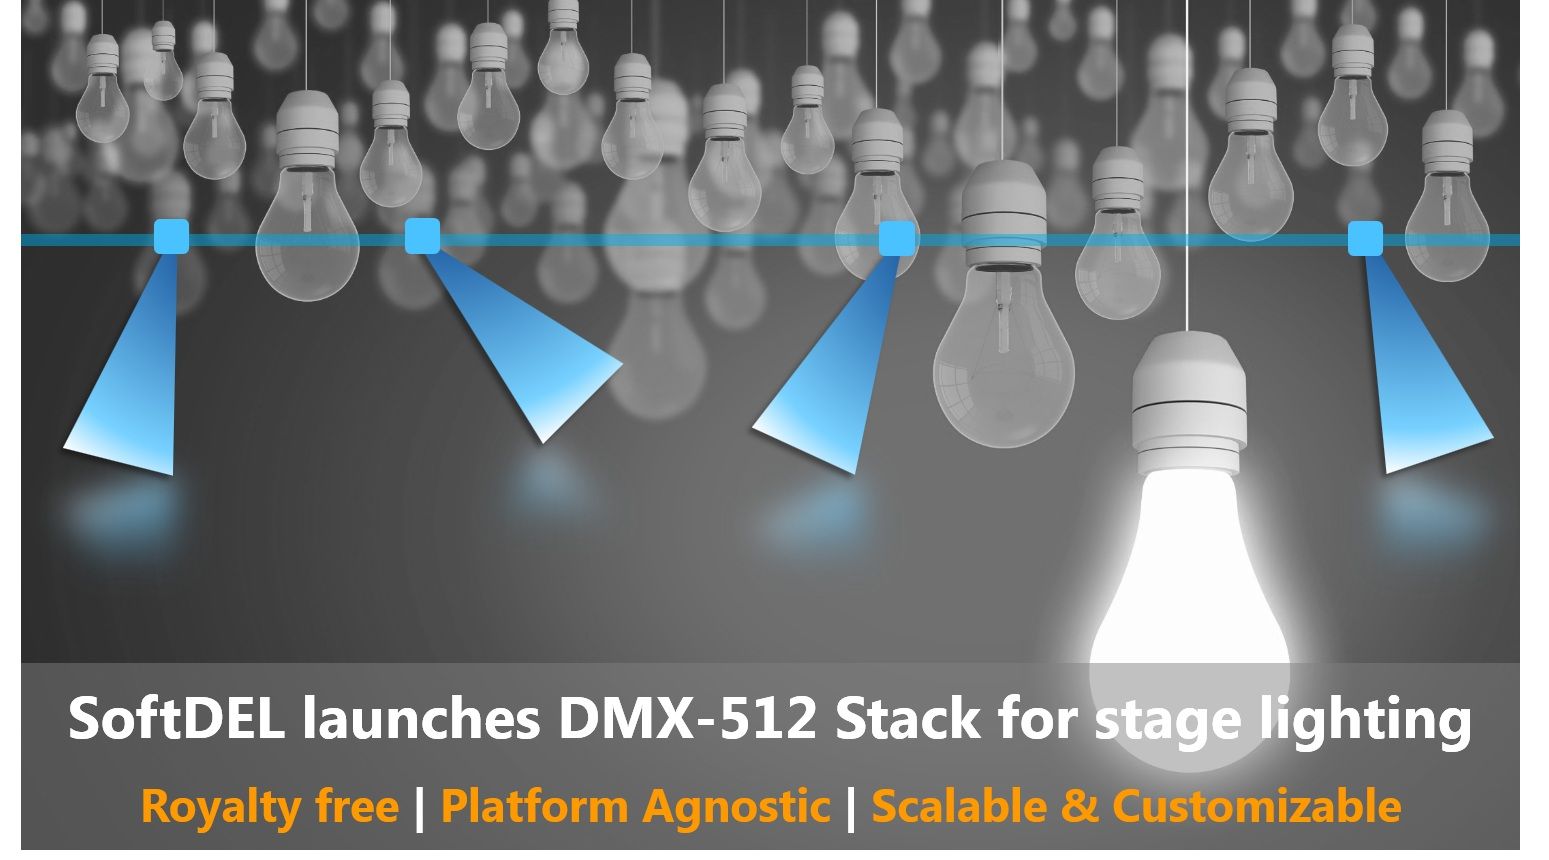 DMX-512 Stack